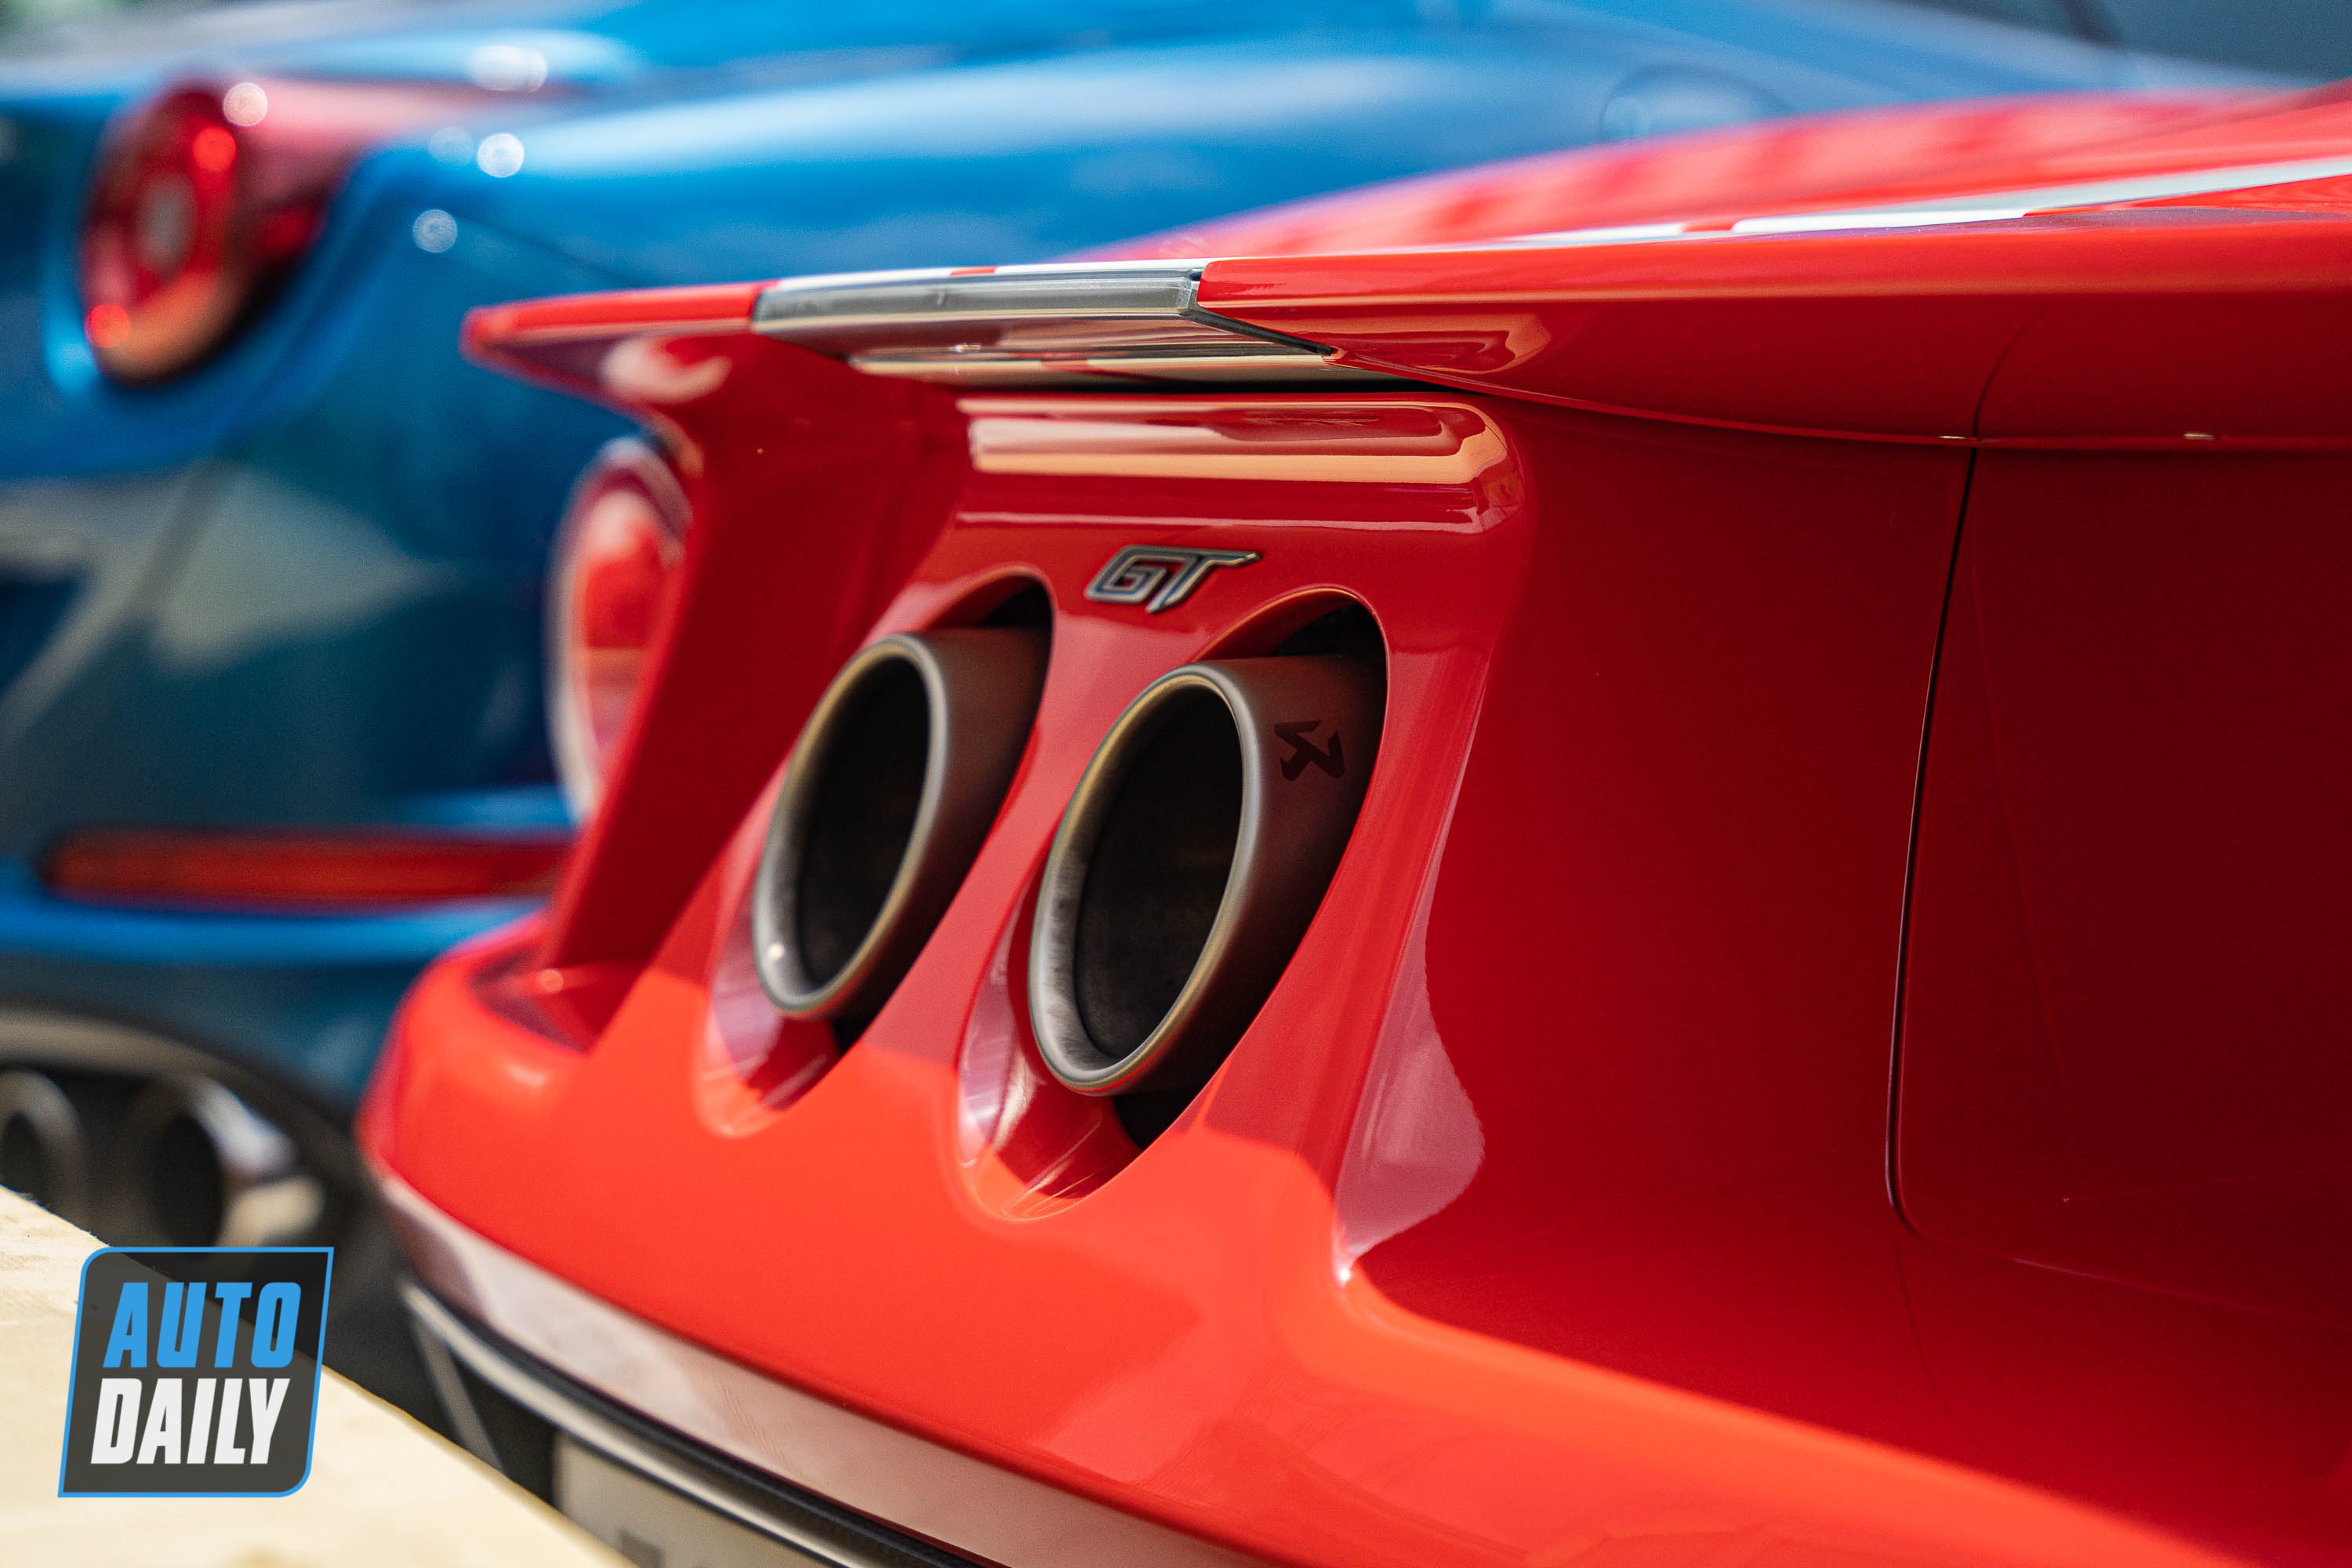 Khám phá Ford GT Heritage Edition trị giá hơn 60 tỷ ford-gt-heritage-edition-doc-nhat-viet-nam-autodaily-13.JPG